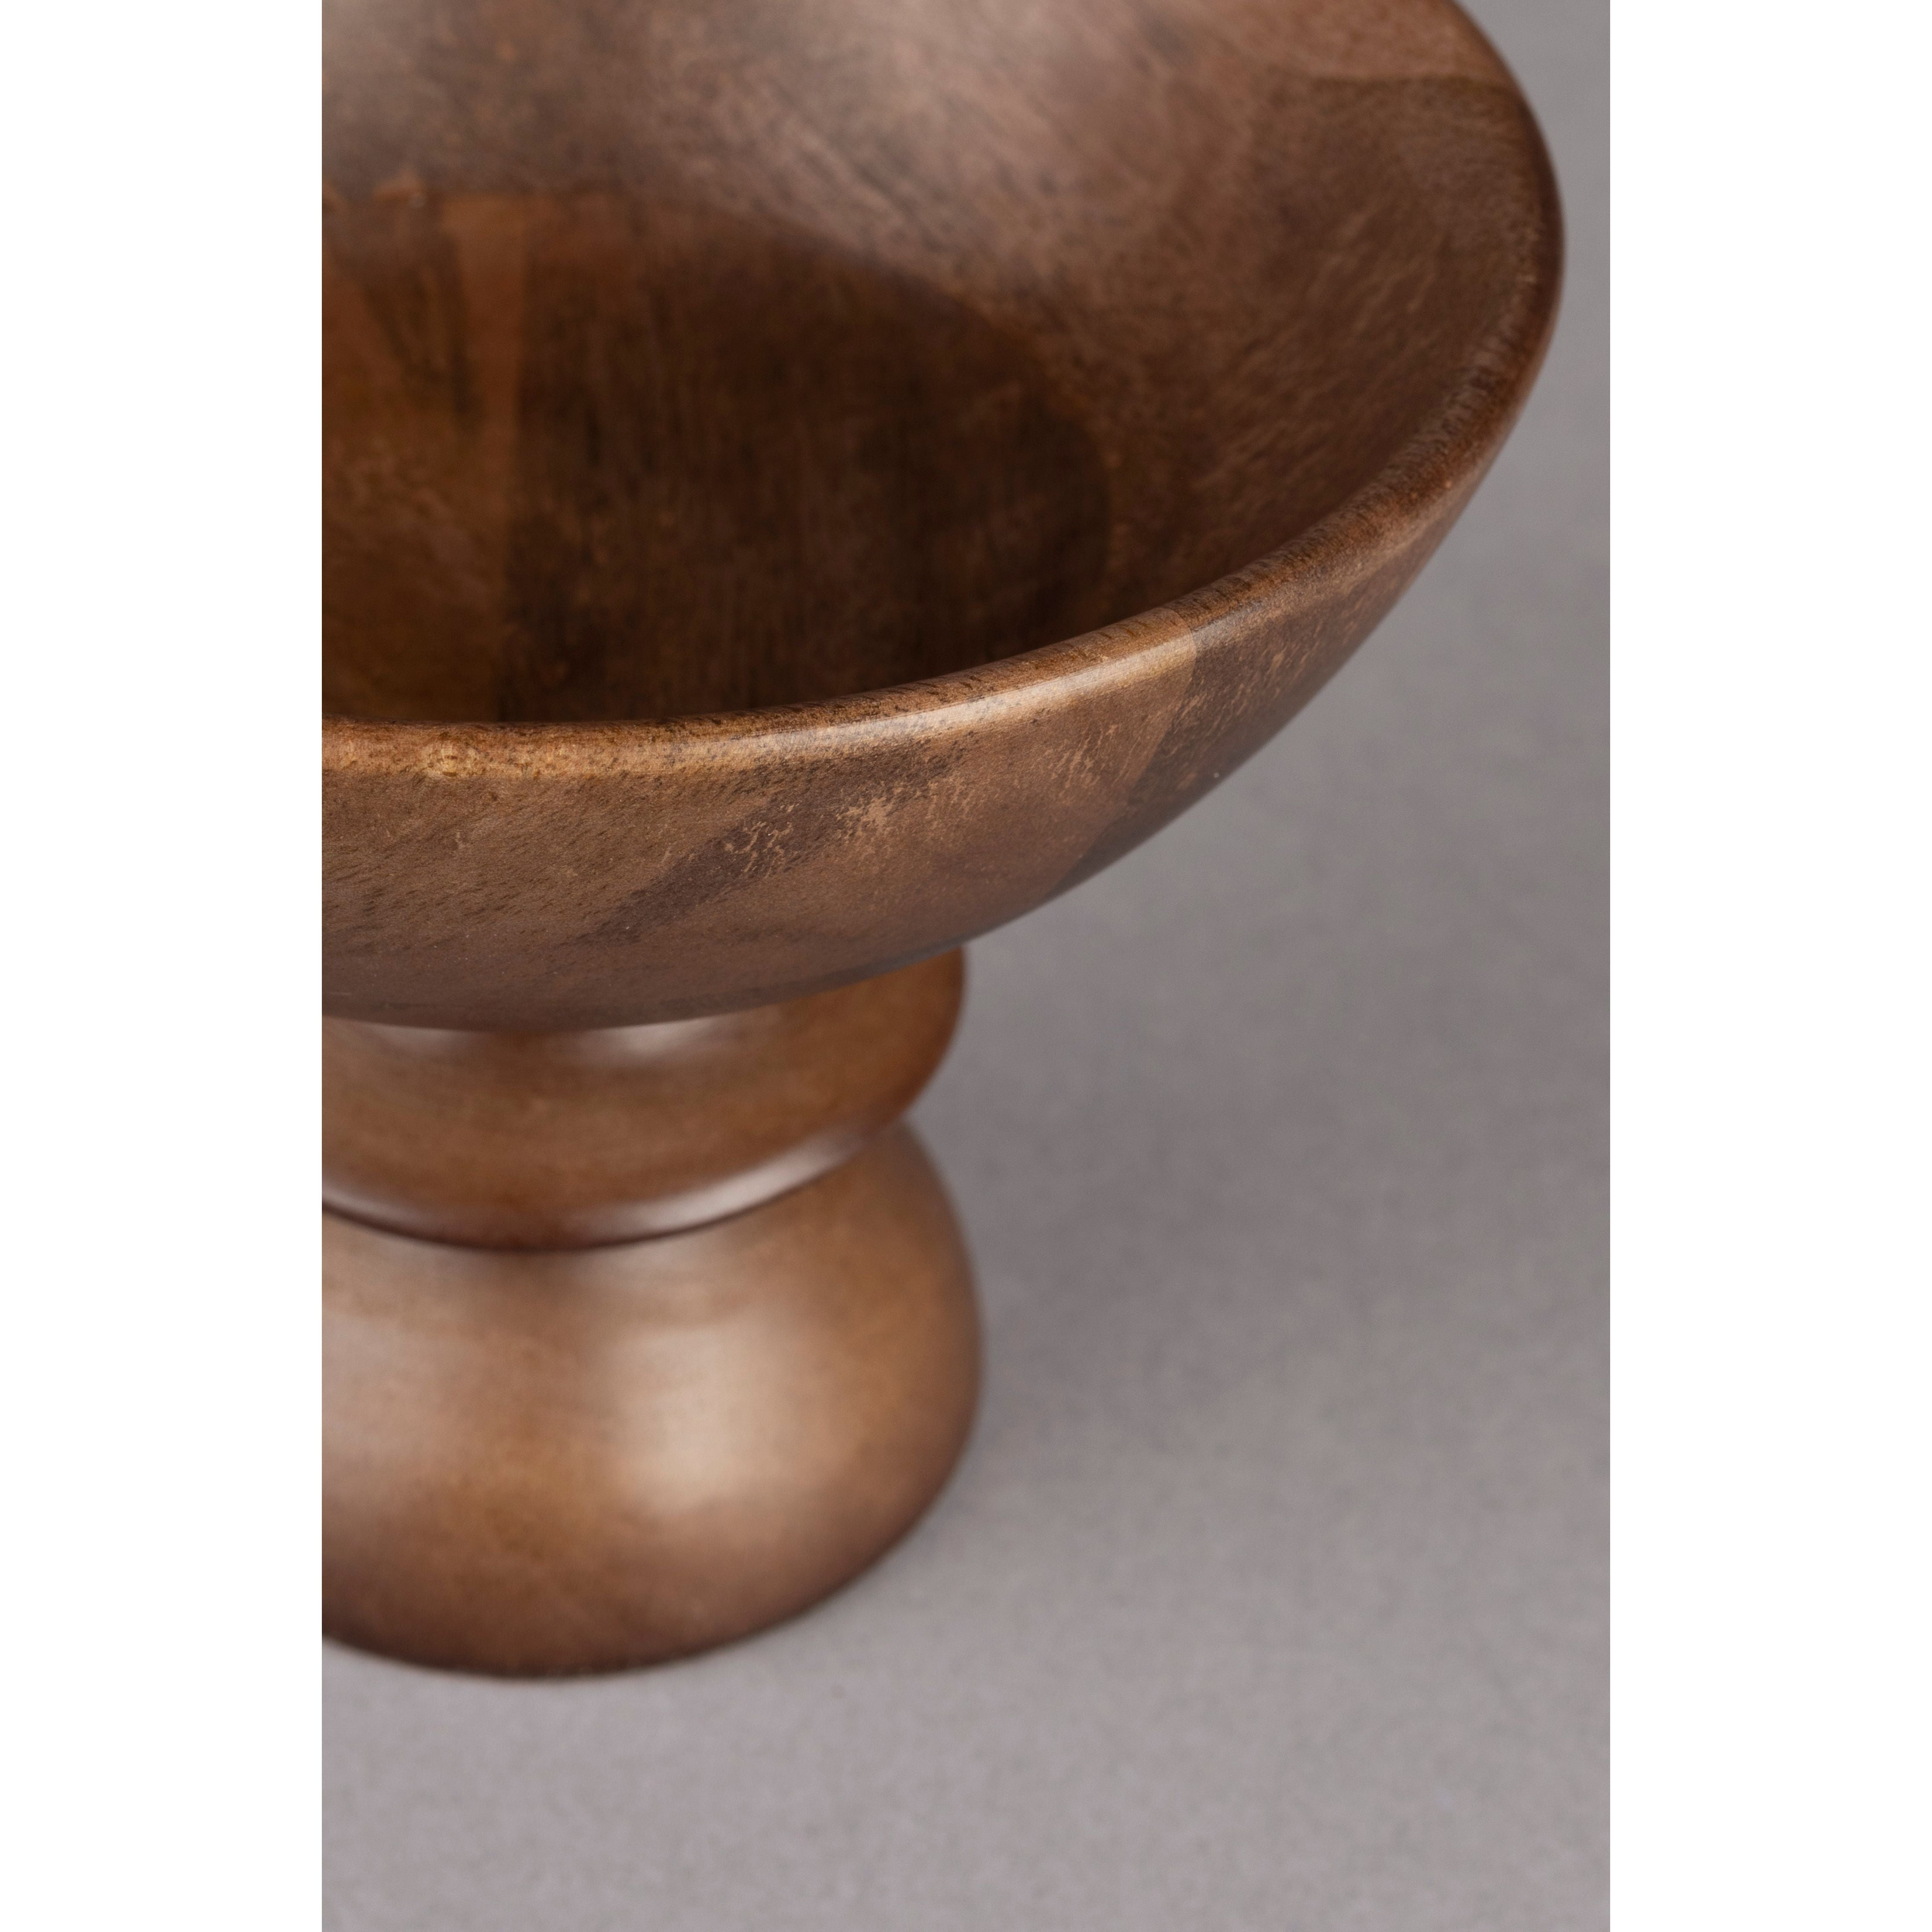 Wooden bowl gwen s